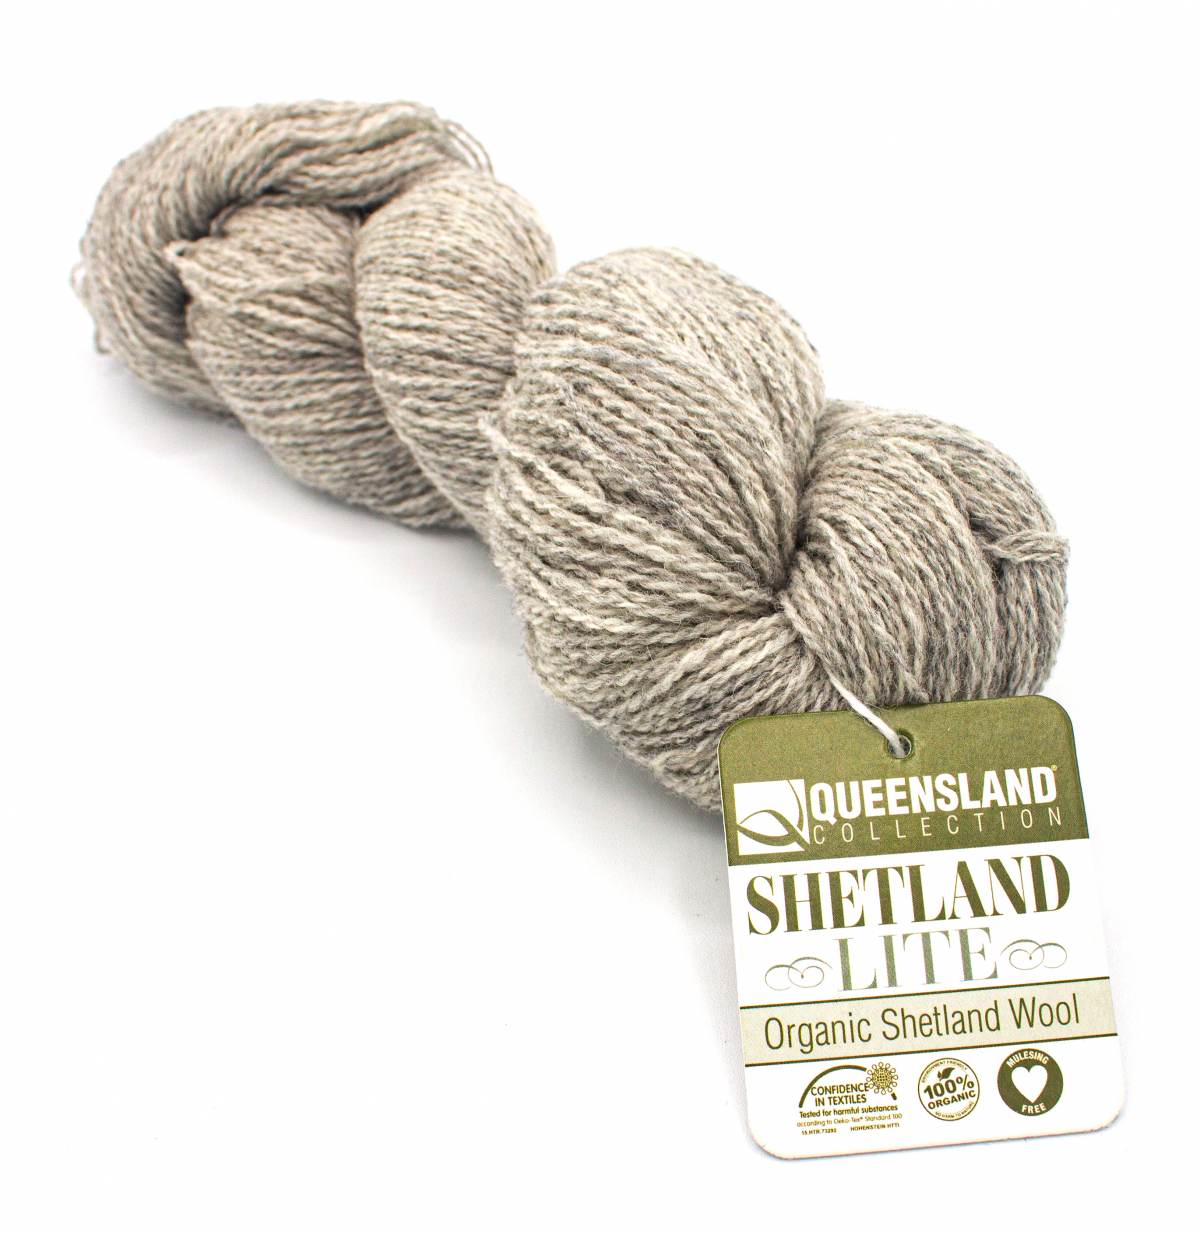 a skein of Shetland Lite